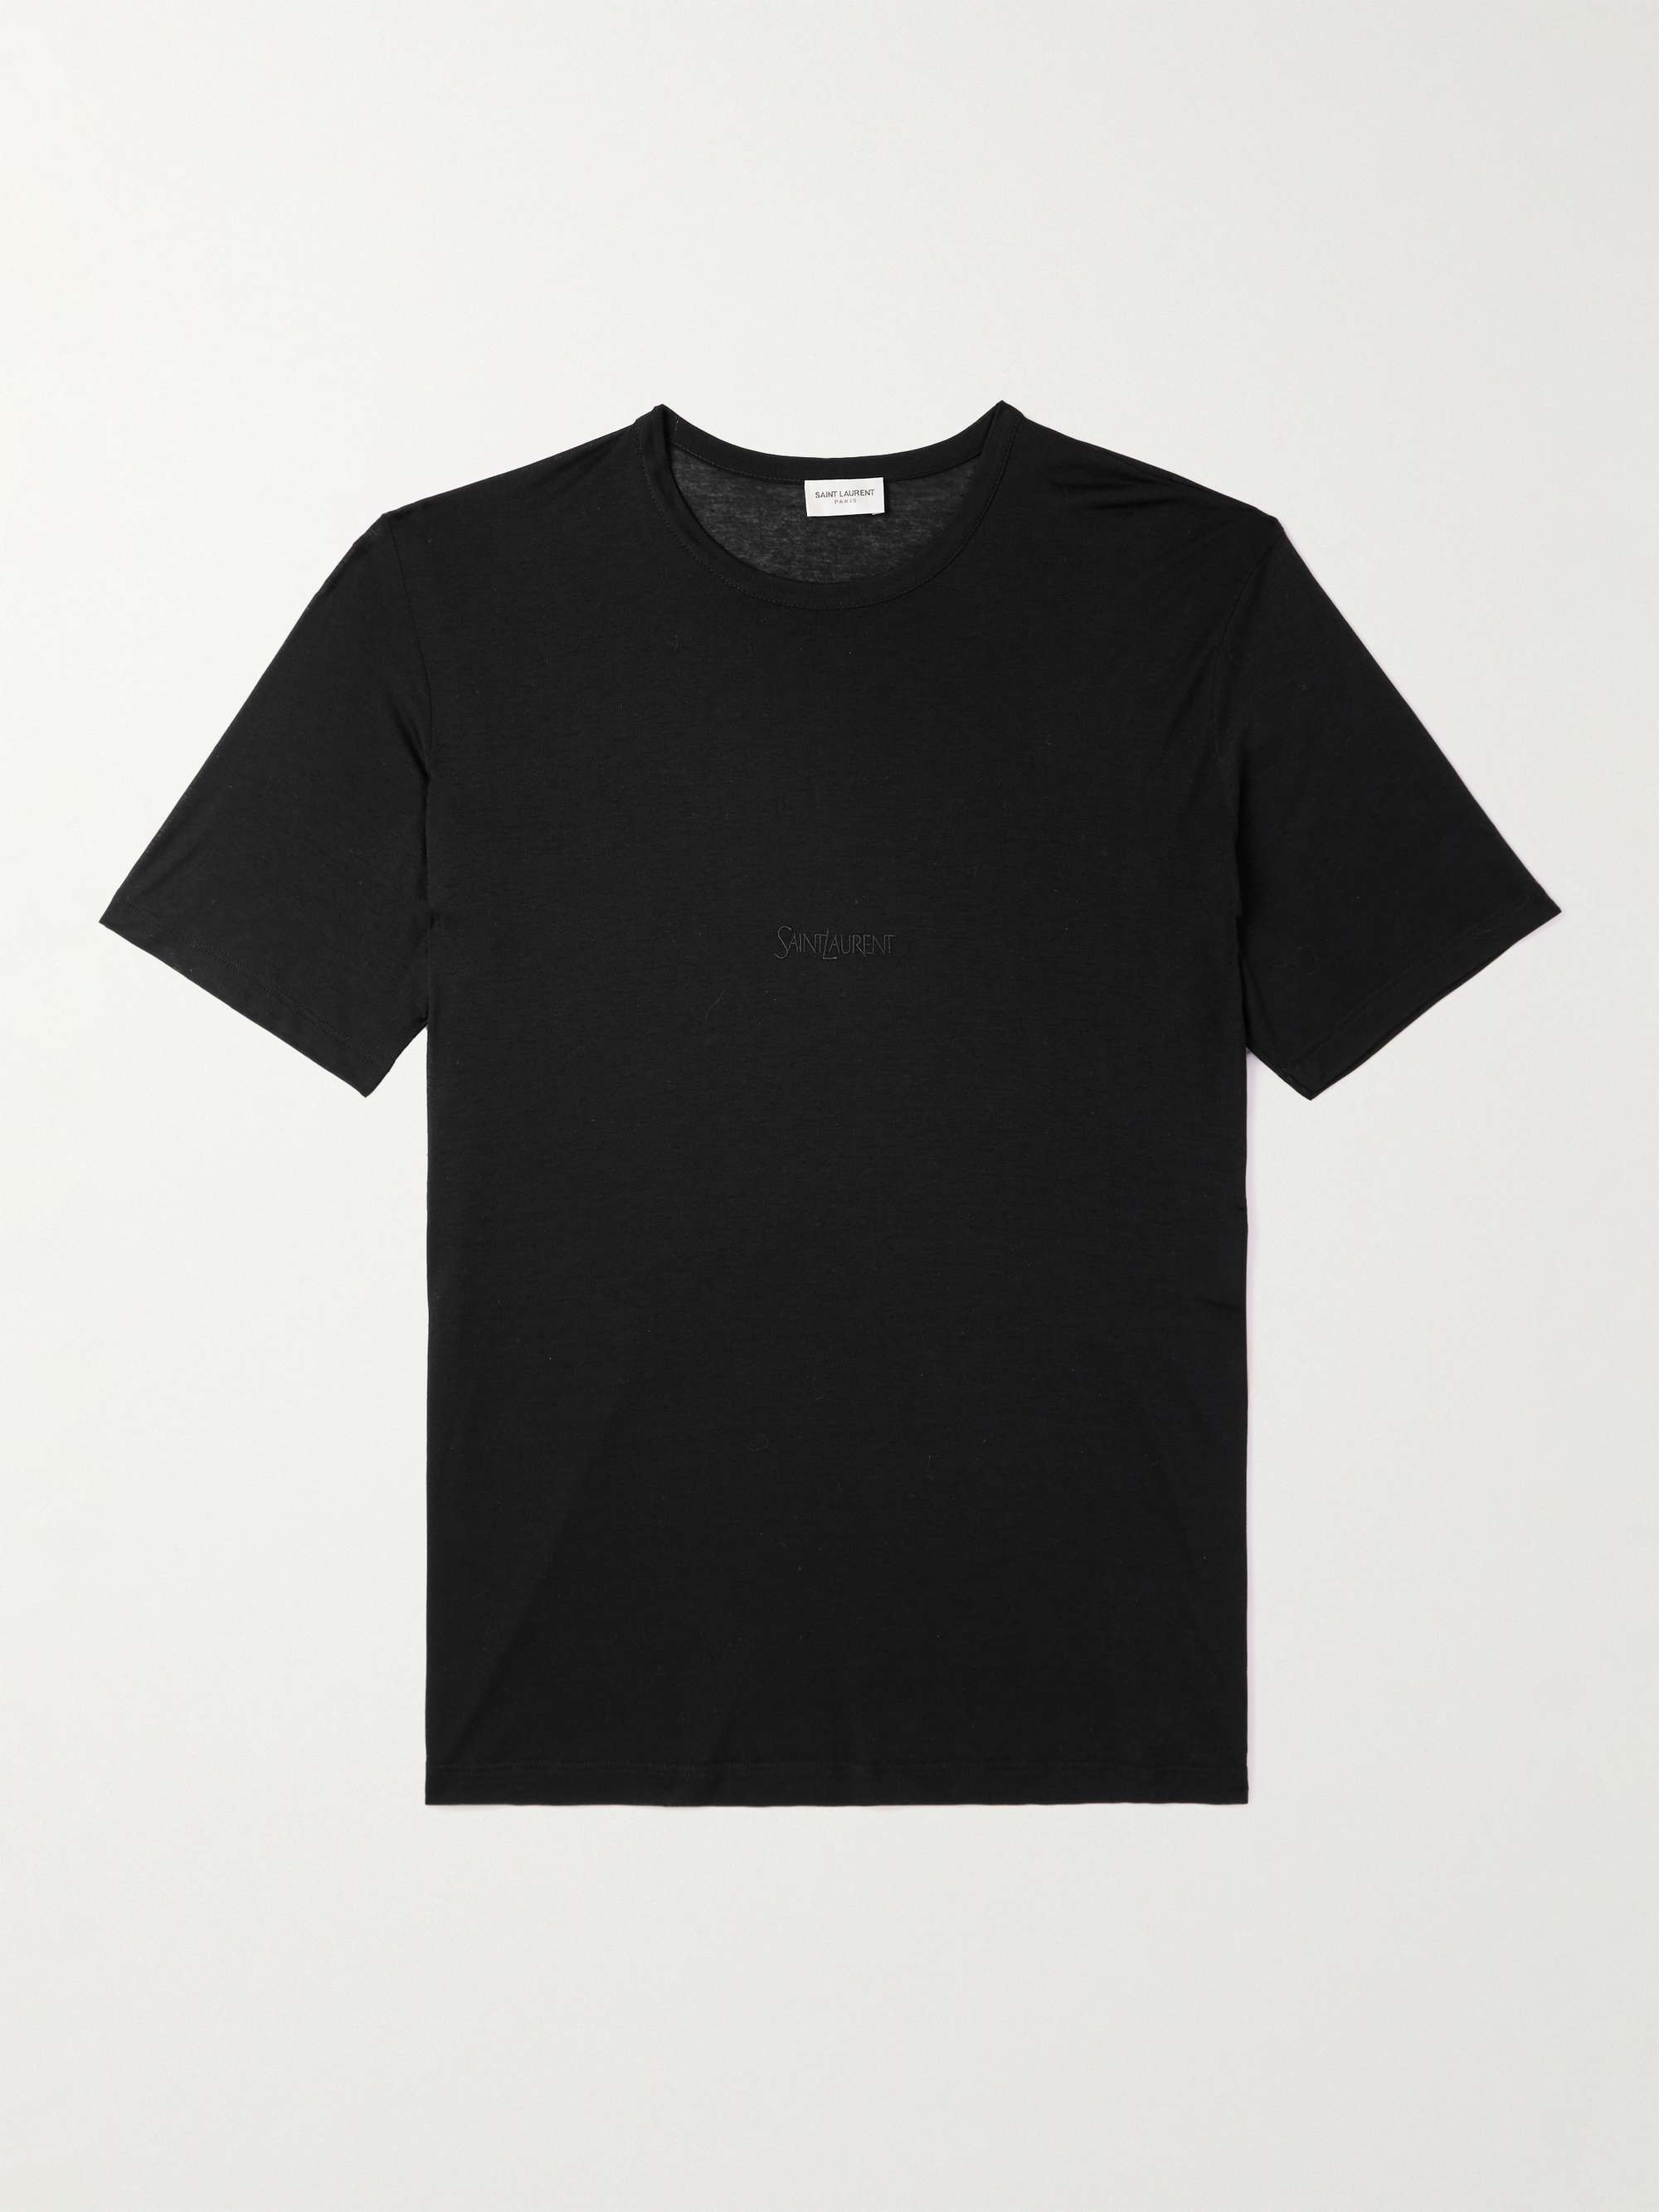 SAINT LAURENT Logo-Embroidered Jersey T-Shirt for Men | MR PORTER